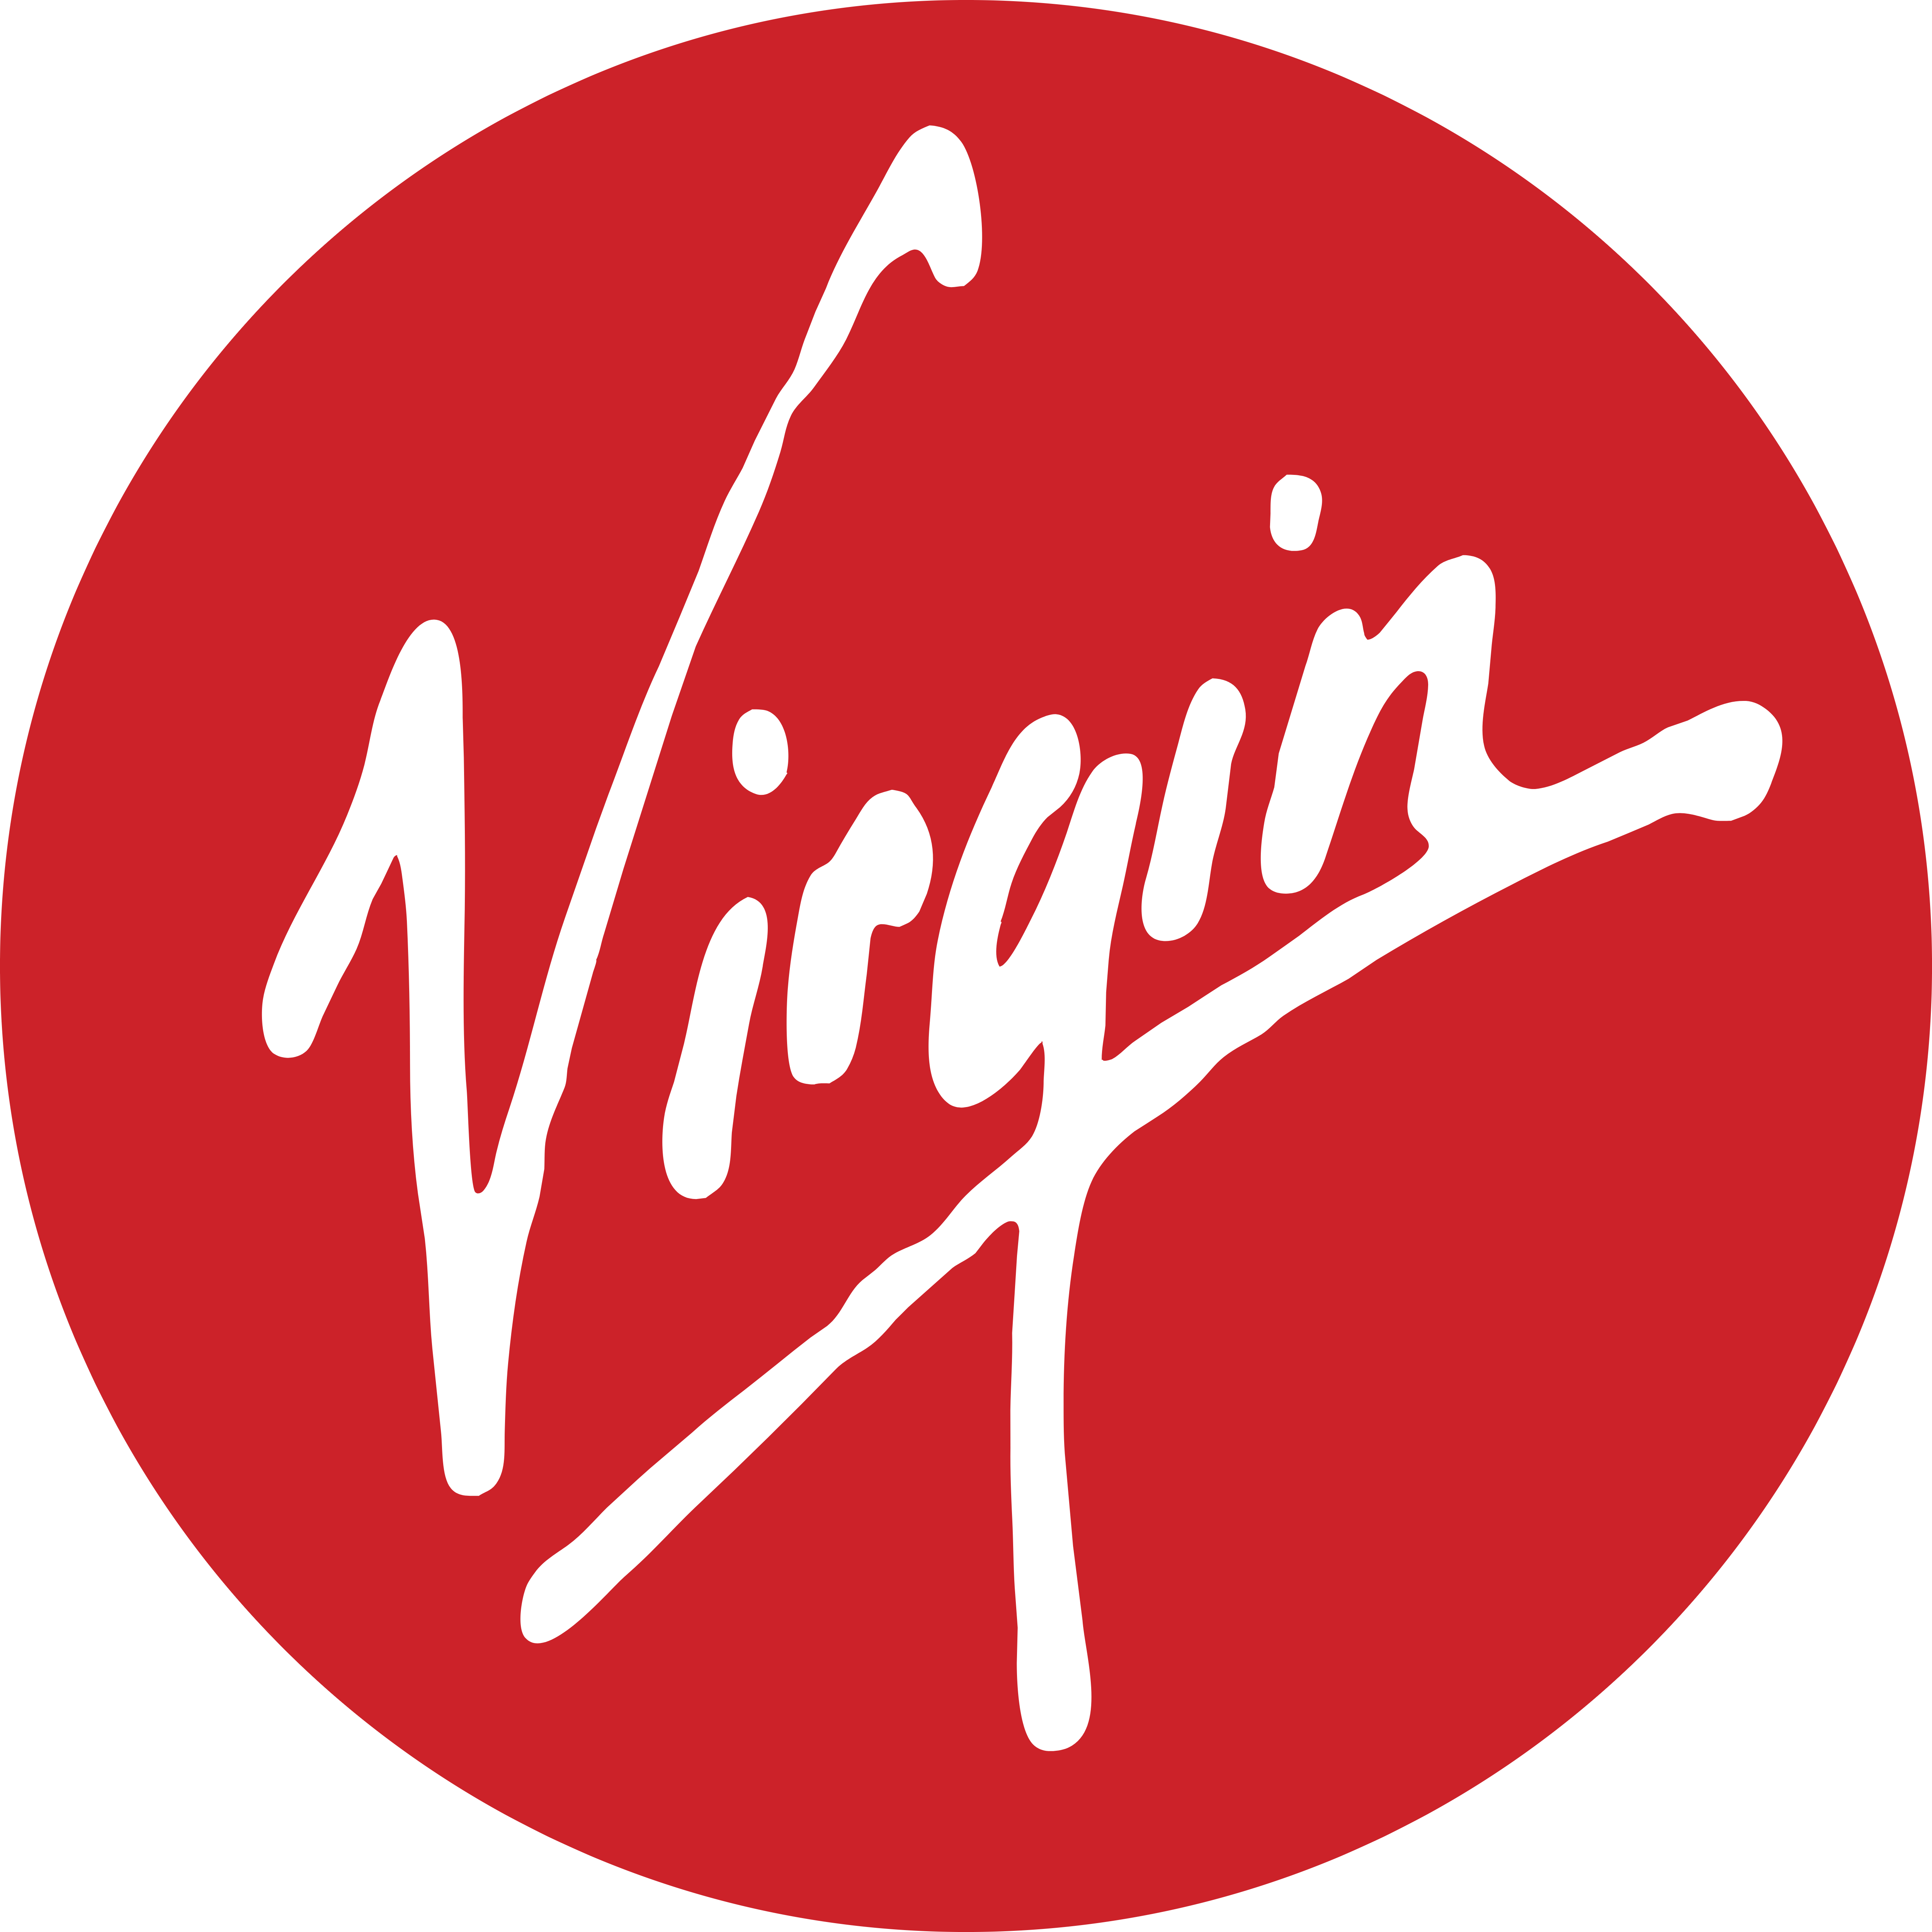 Virgin – Logos Download